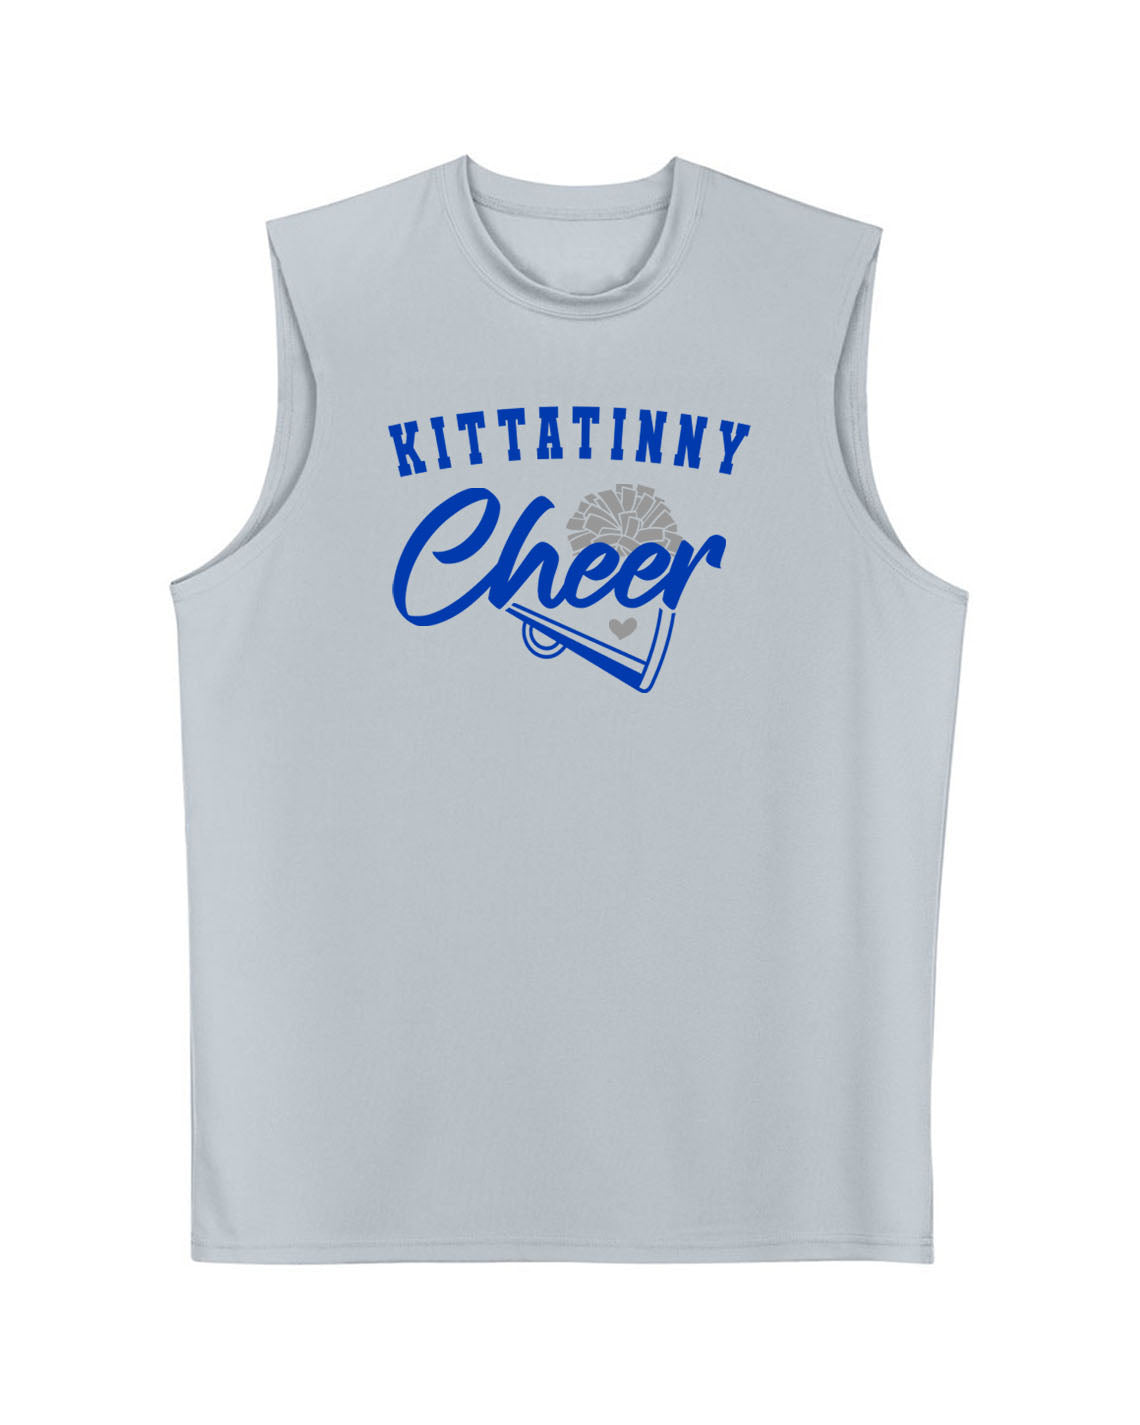 Kittatinny Cheer Men's Performance Tank Top Design 9